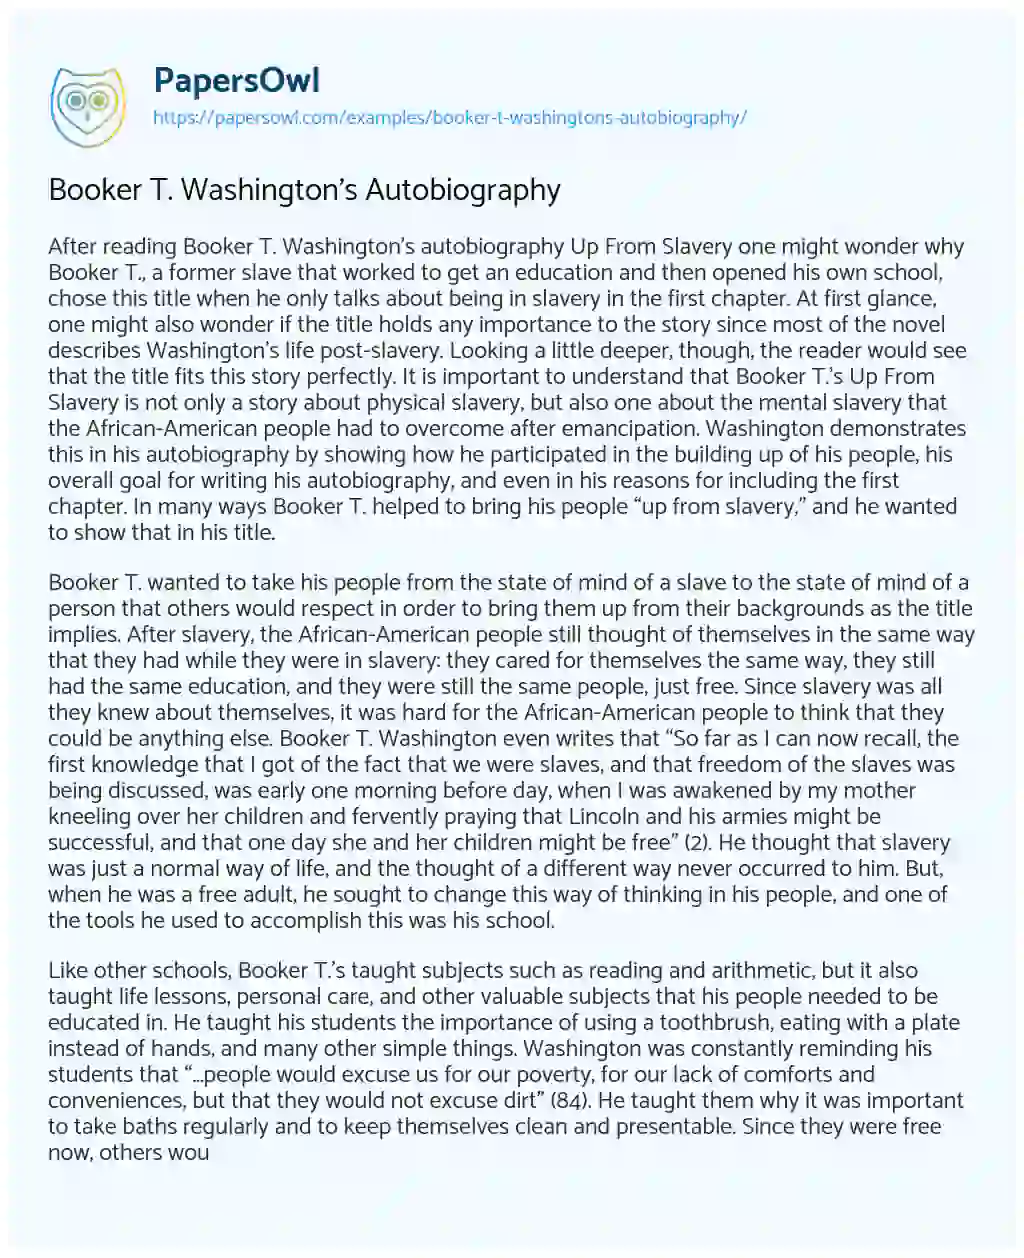 Essay on Booker T. Washington’s Autobiography